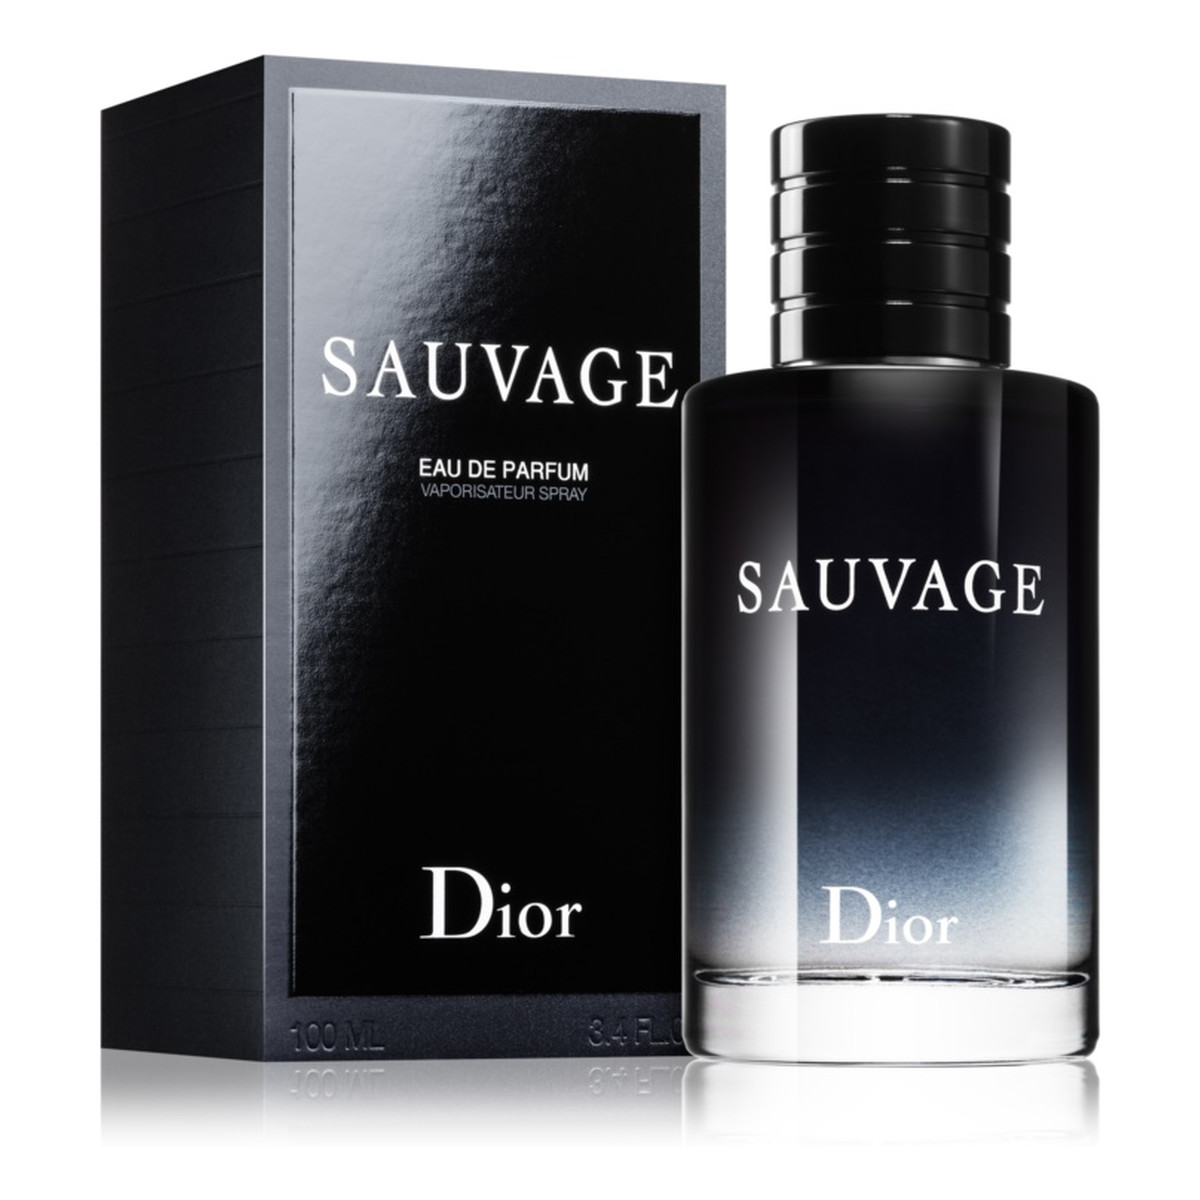 Dior Eau Sauvage woda perfumowana 100ml